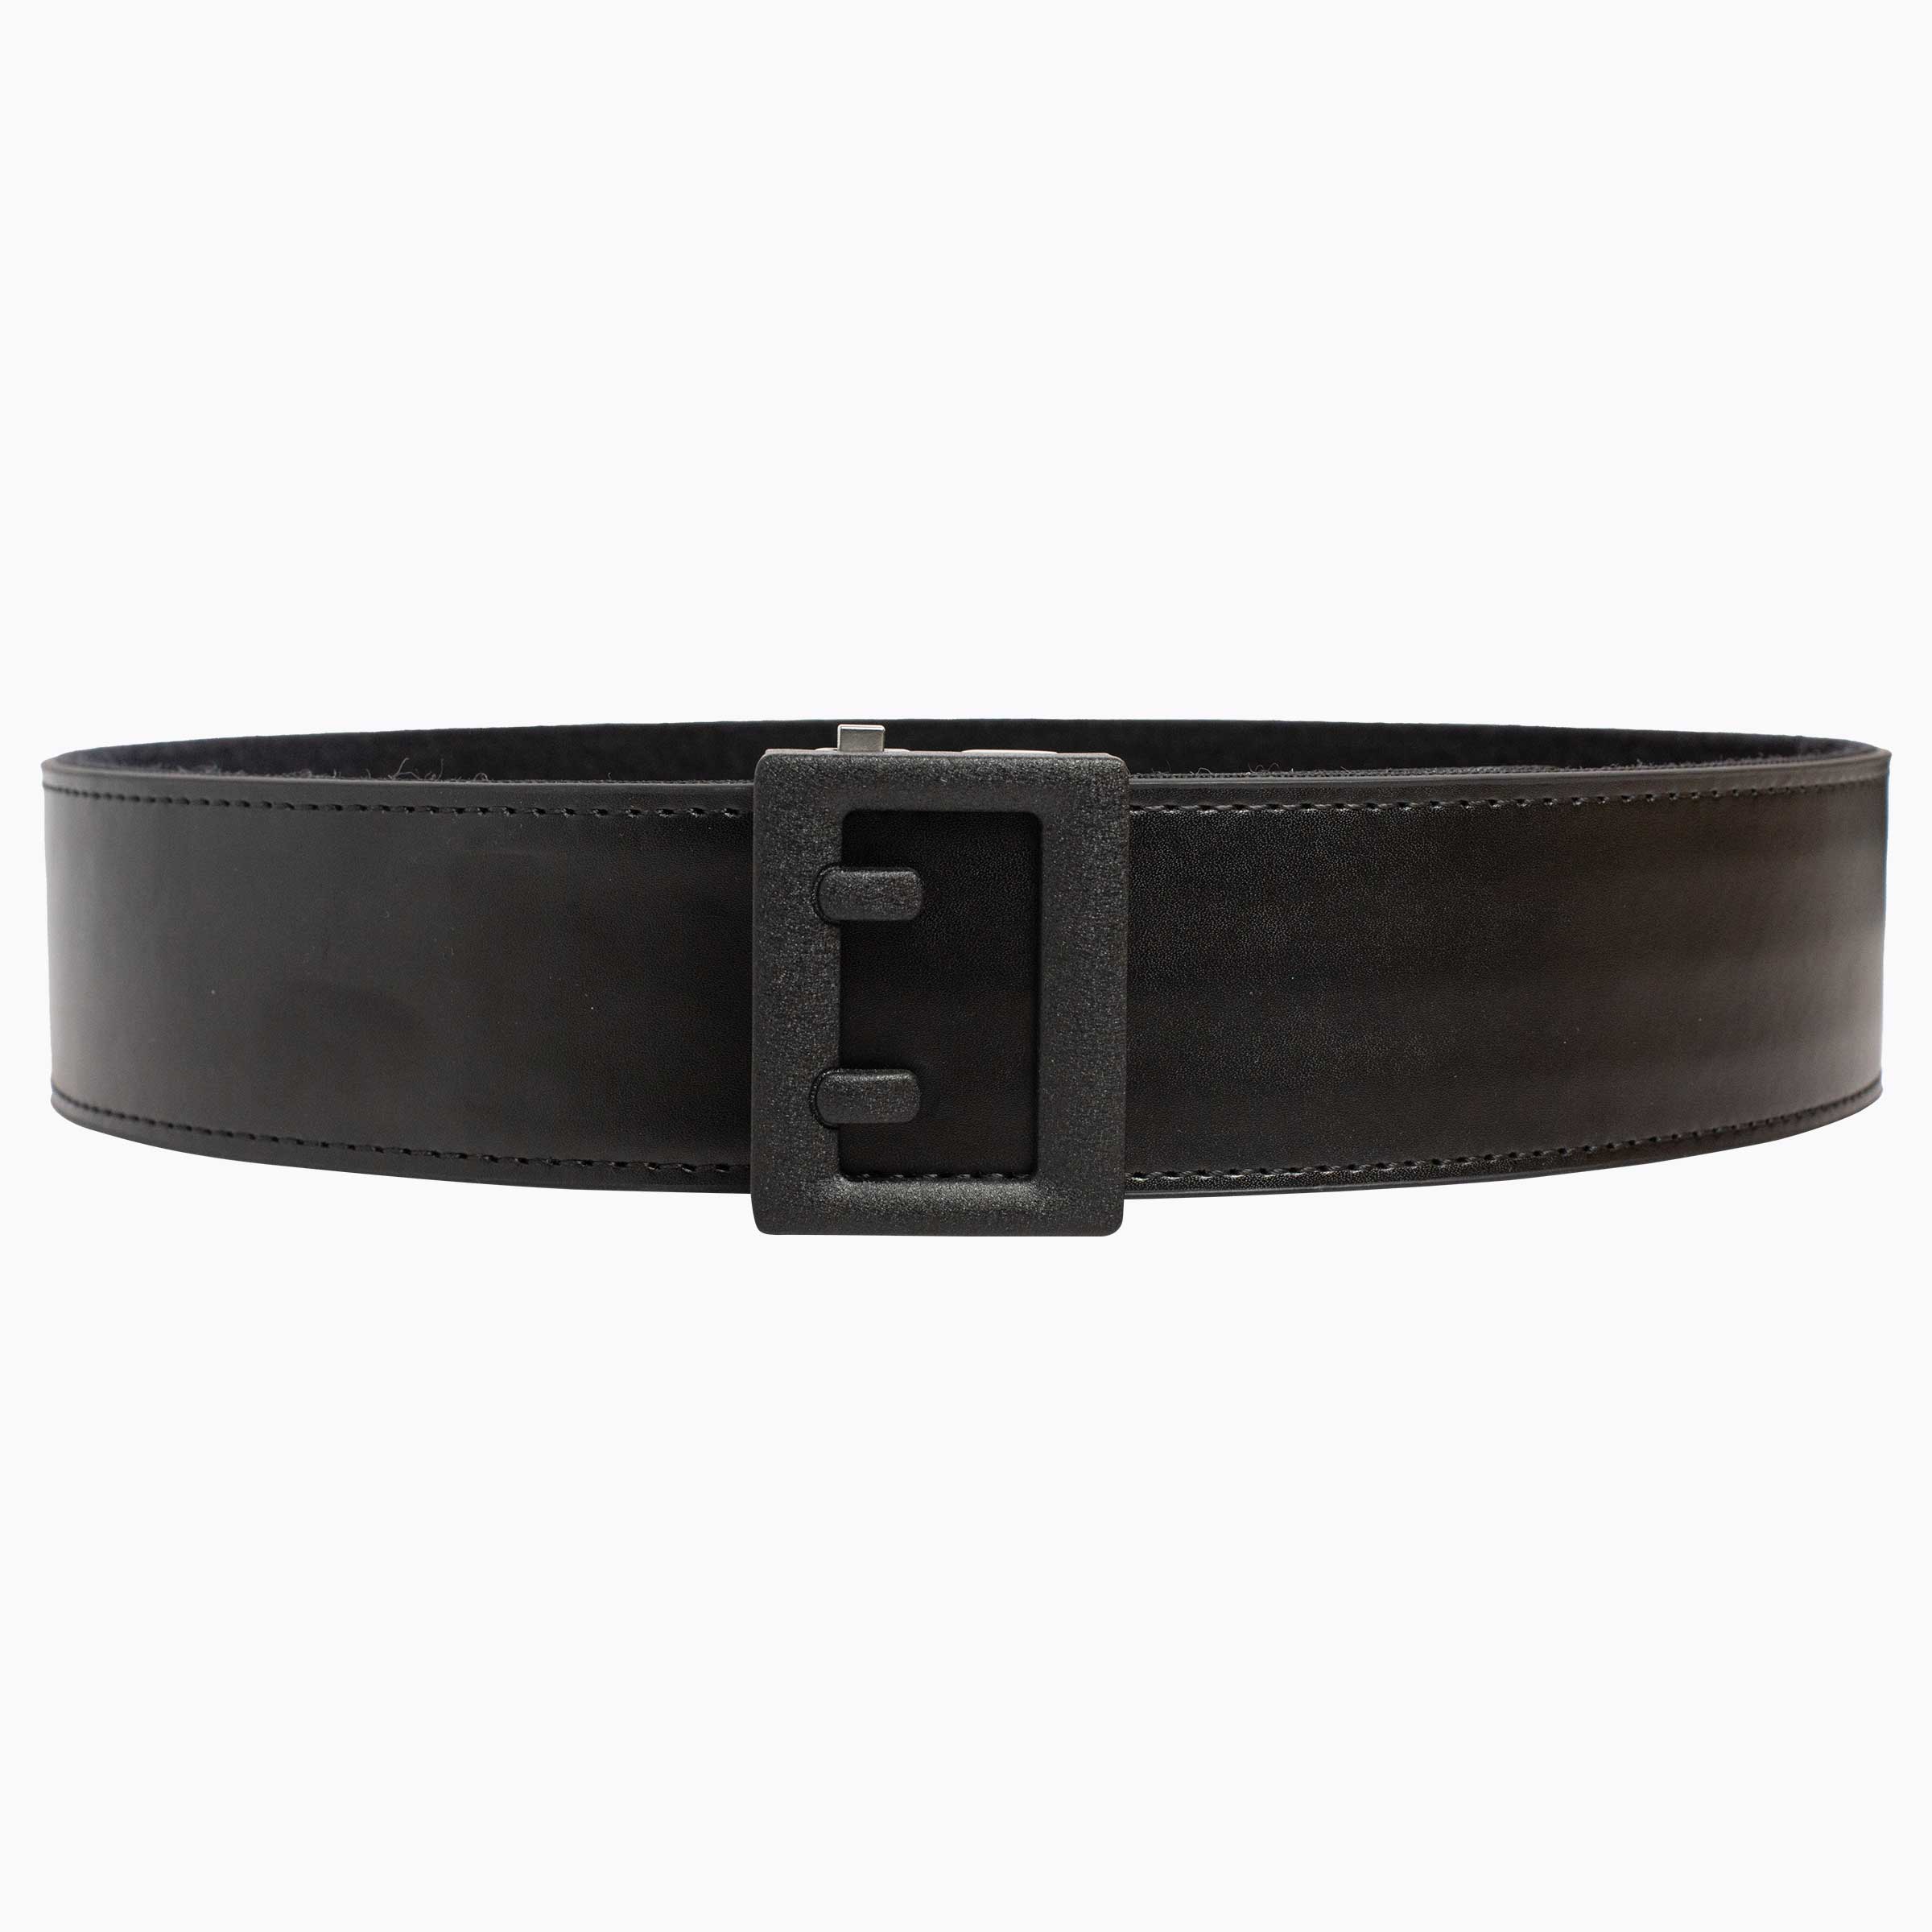 Black Leather, 2.25" strap, Duty Belt